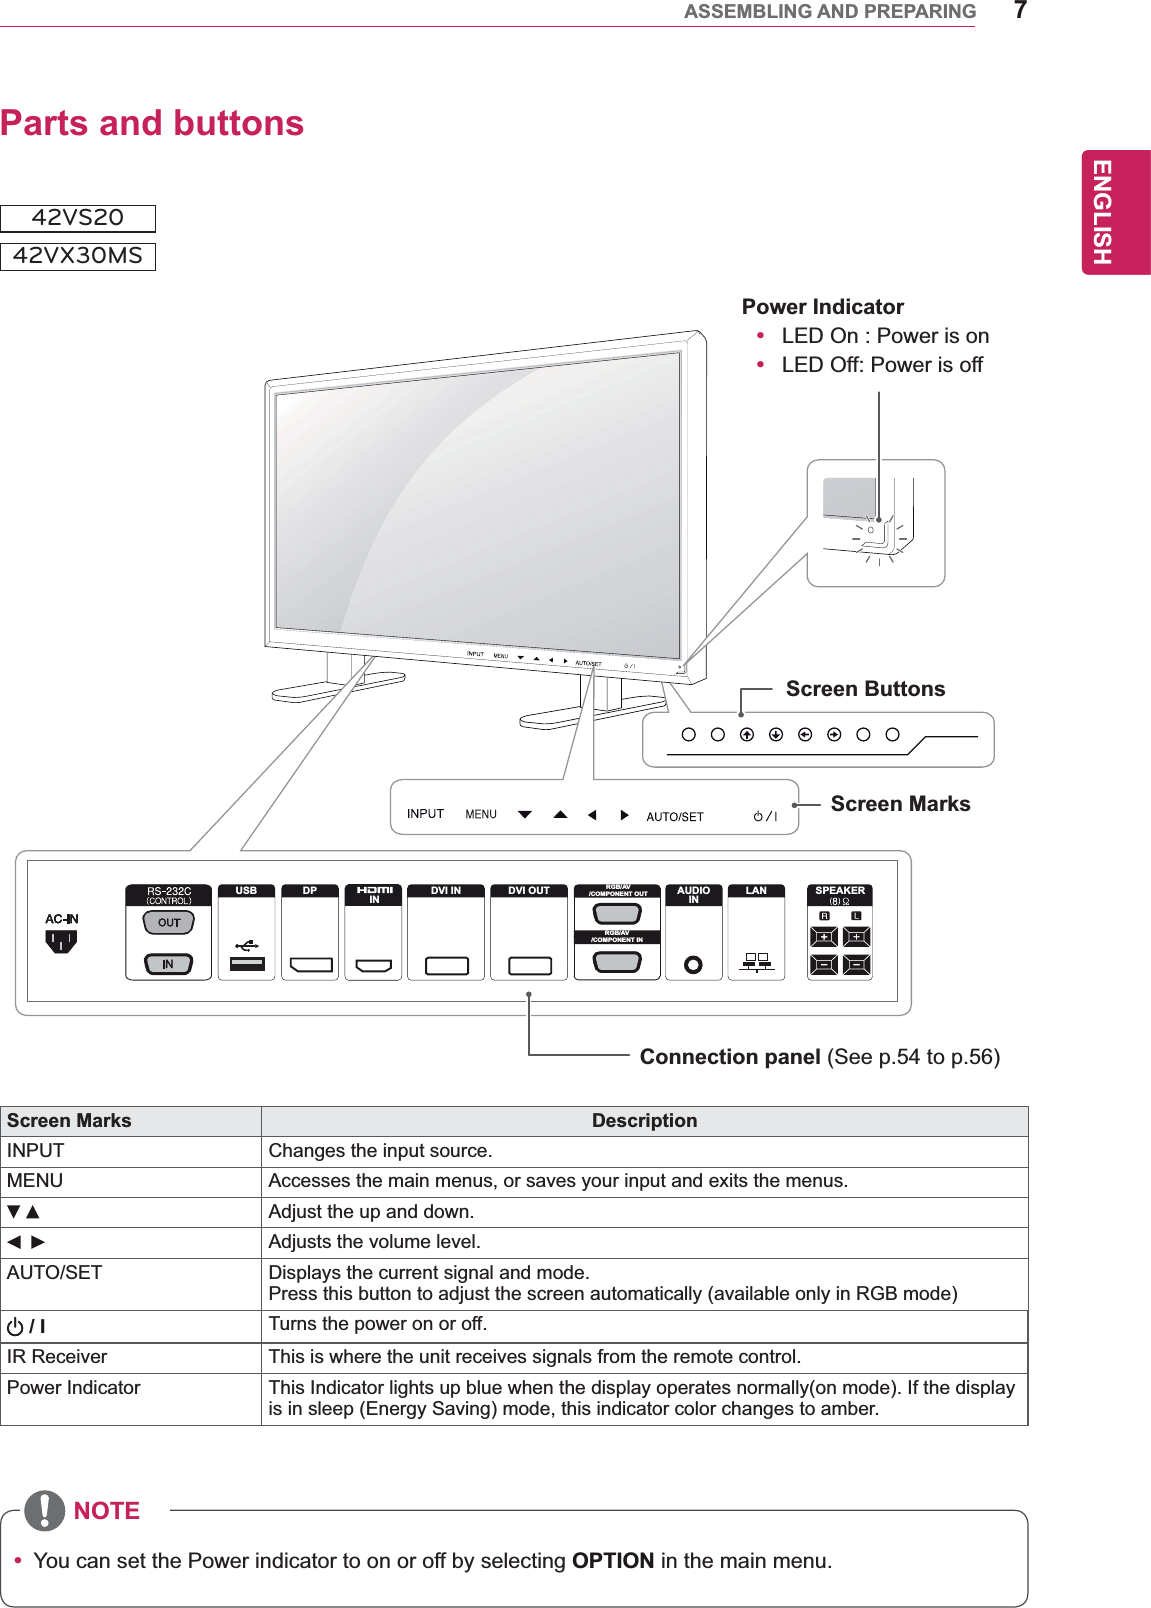 USB DP LANAUDIOINDVI IN DVI OUTIN SPEAKERRGB/AV/COMPONENT OUTRGB/AV/COMPONENT INy       42VS2042VX30MSy y 